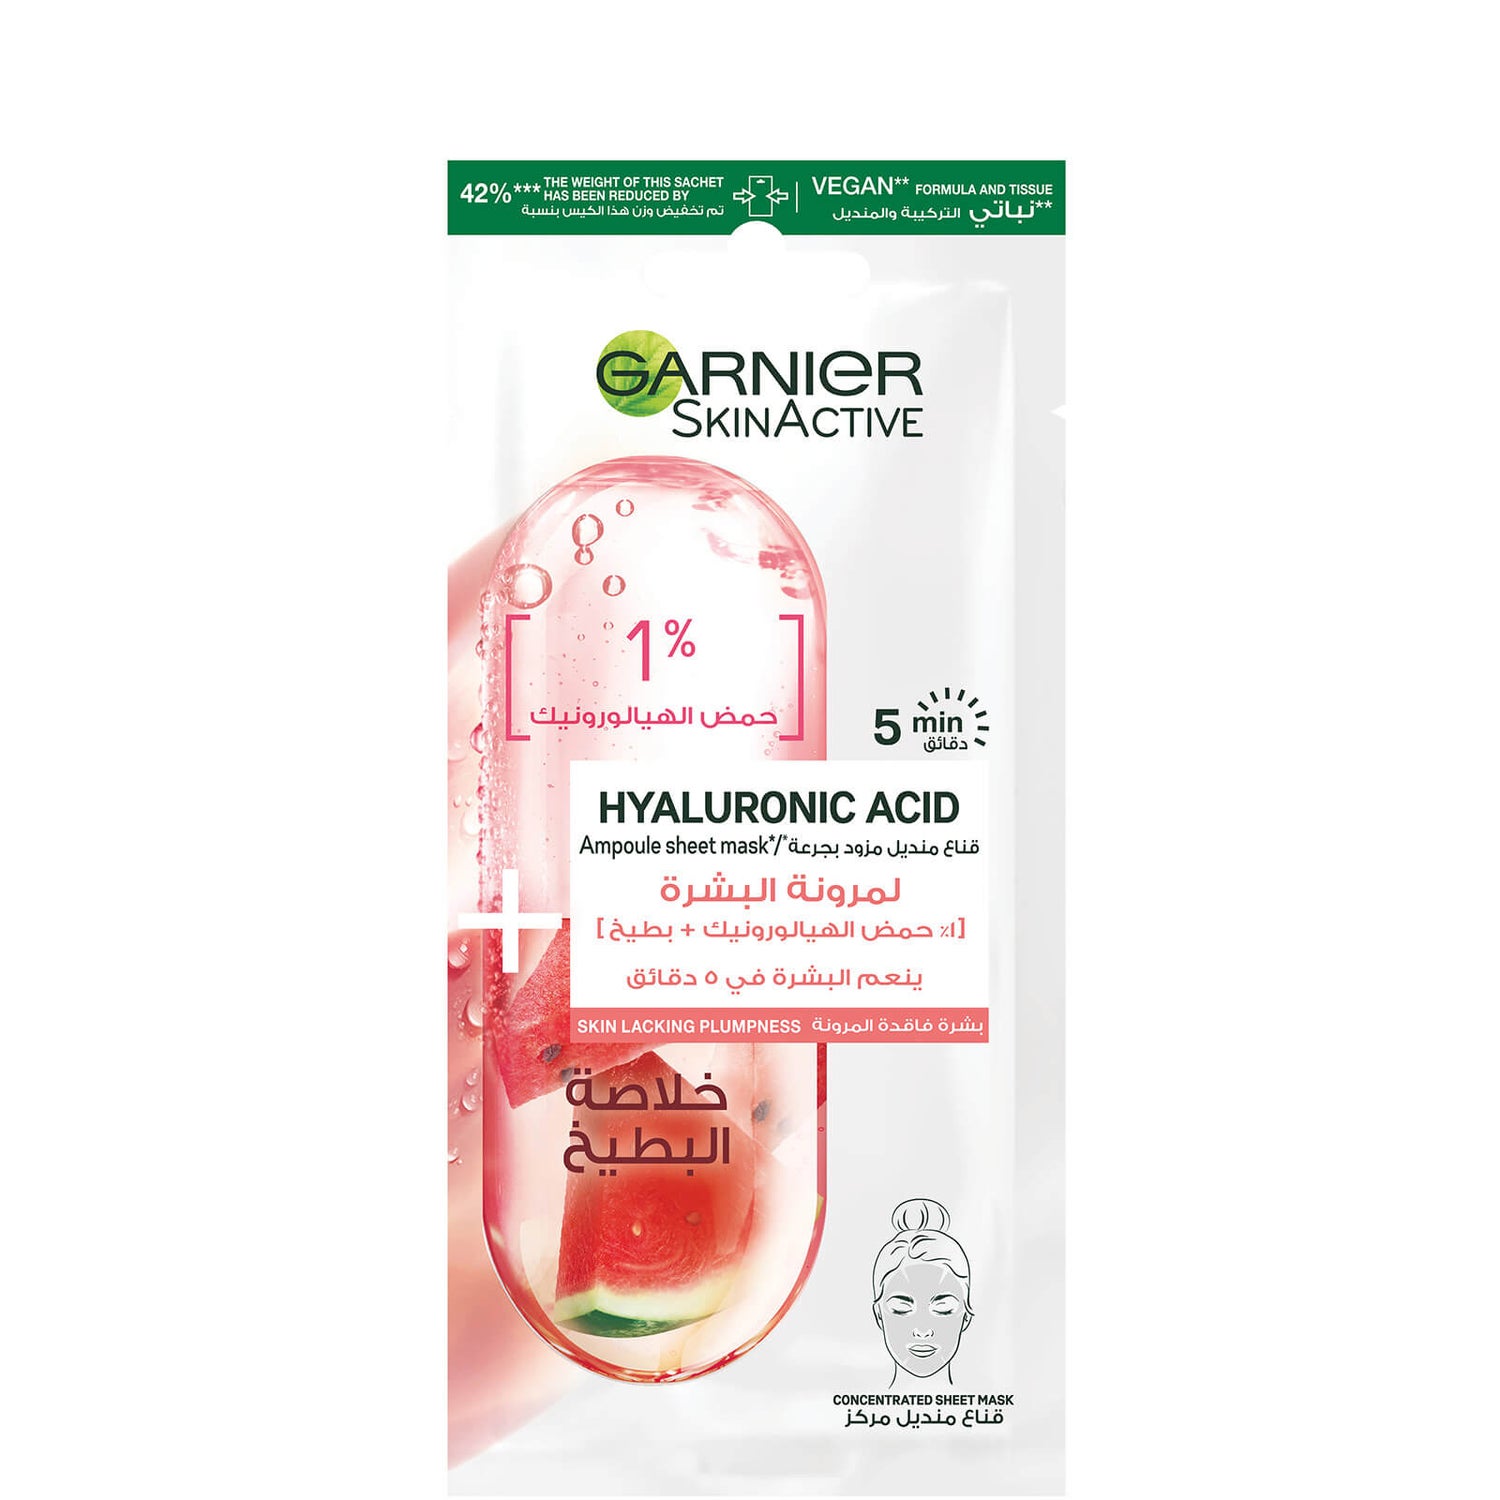 Garnier Skinactive Tissue Mask Ampoule : 1% Hyaluronic Acid X Watermelon